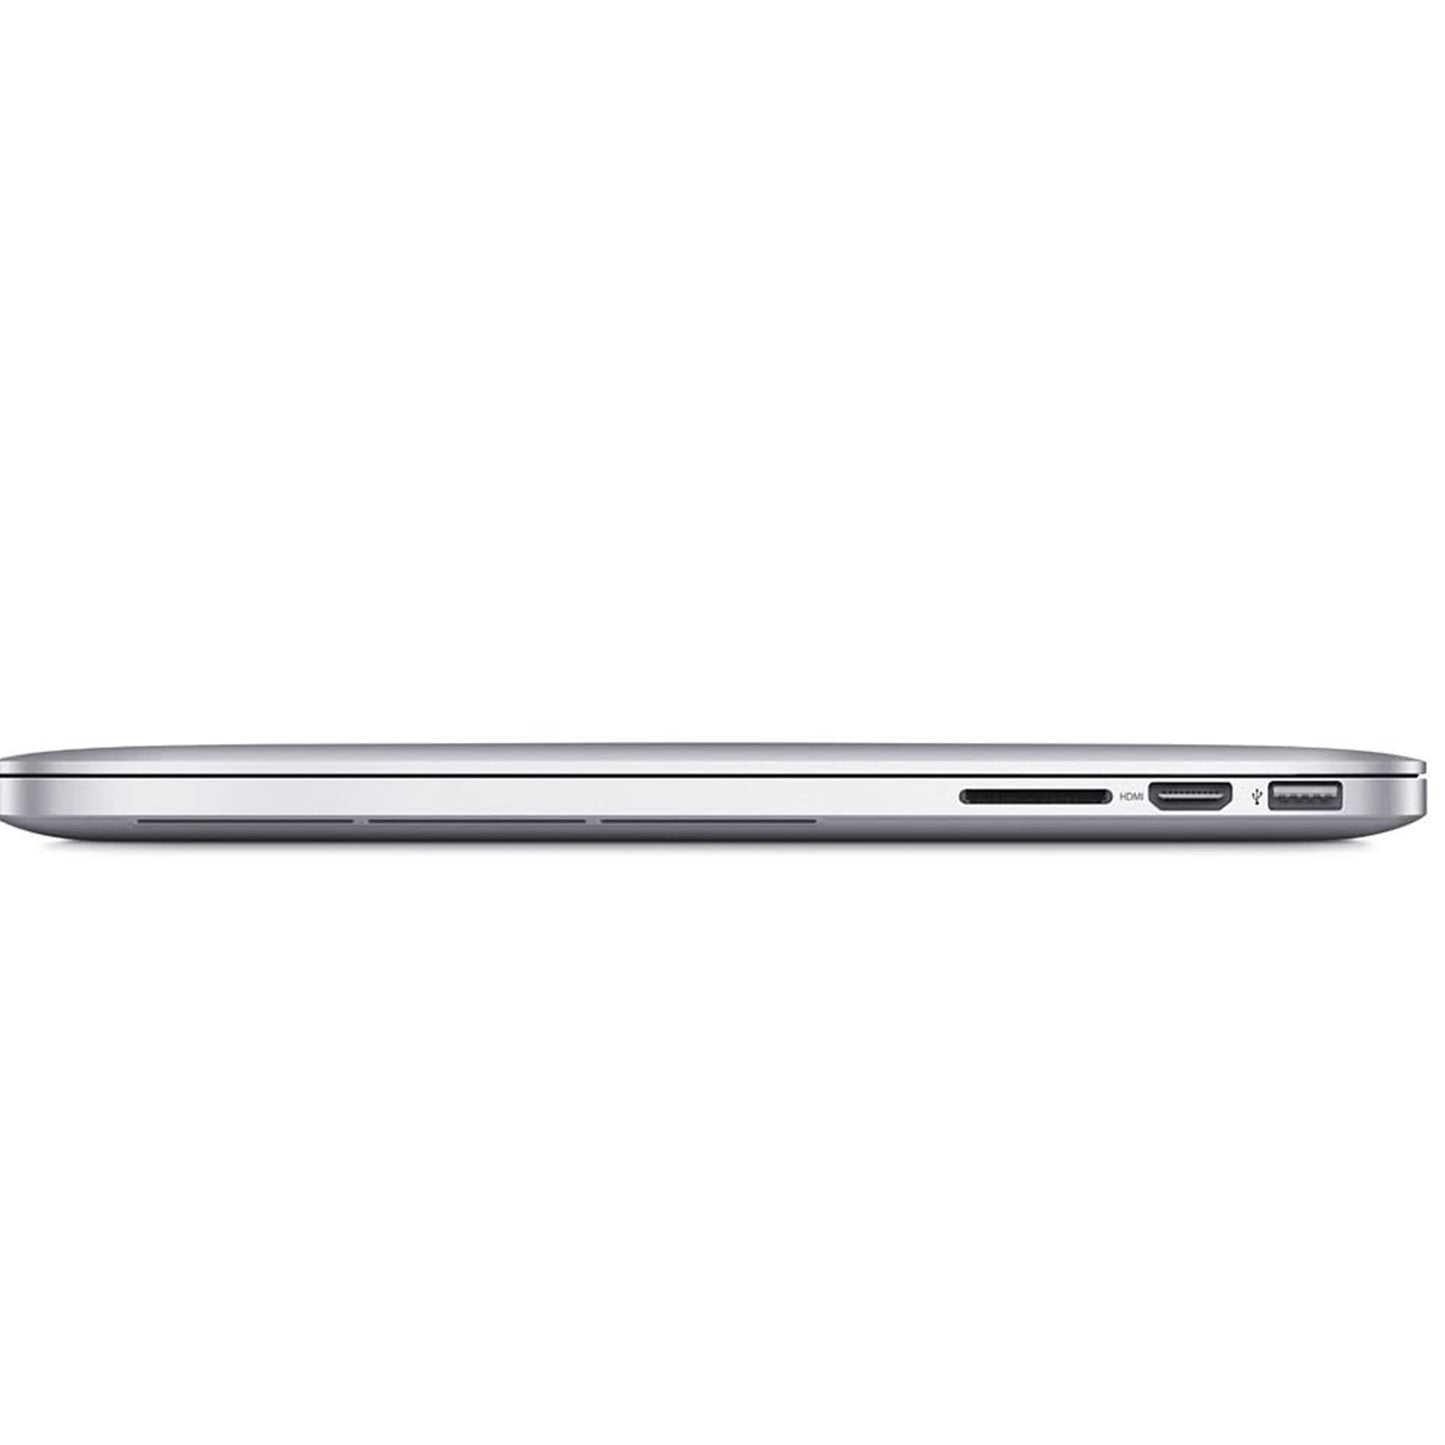 MacBook Pro (Retina, 15-inch, Mid 2014) 15 Inch Laptop - Intel Core I7 - 16 GB RAM -Intel Iris Graphics Pro - Mac OS Big Sur